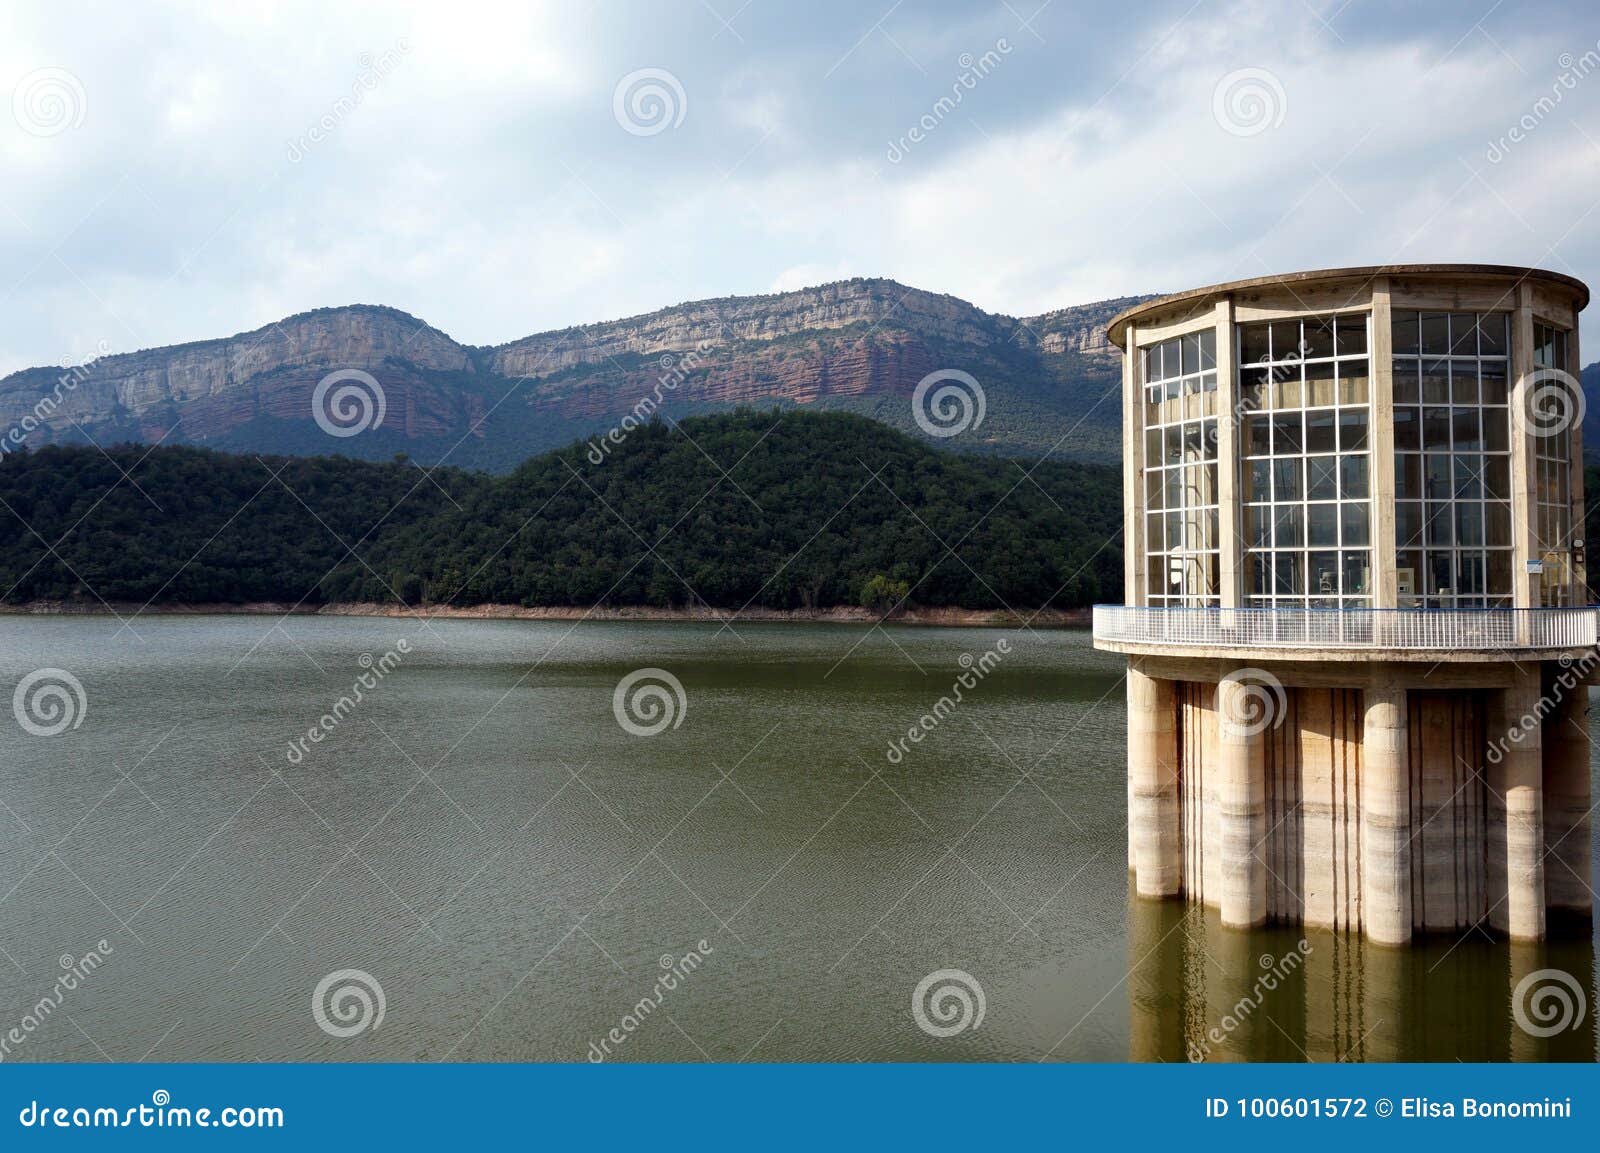 water reservoir view